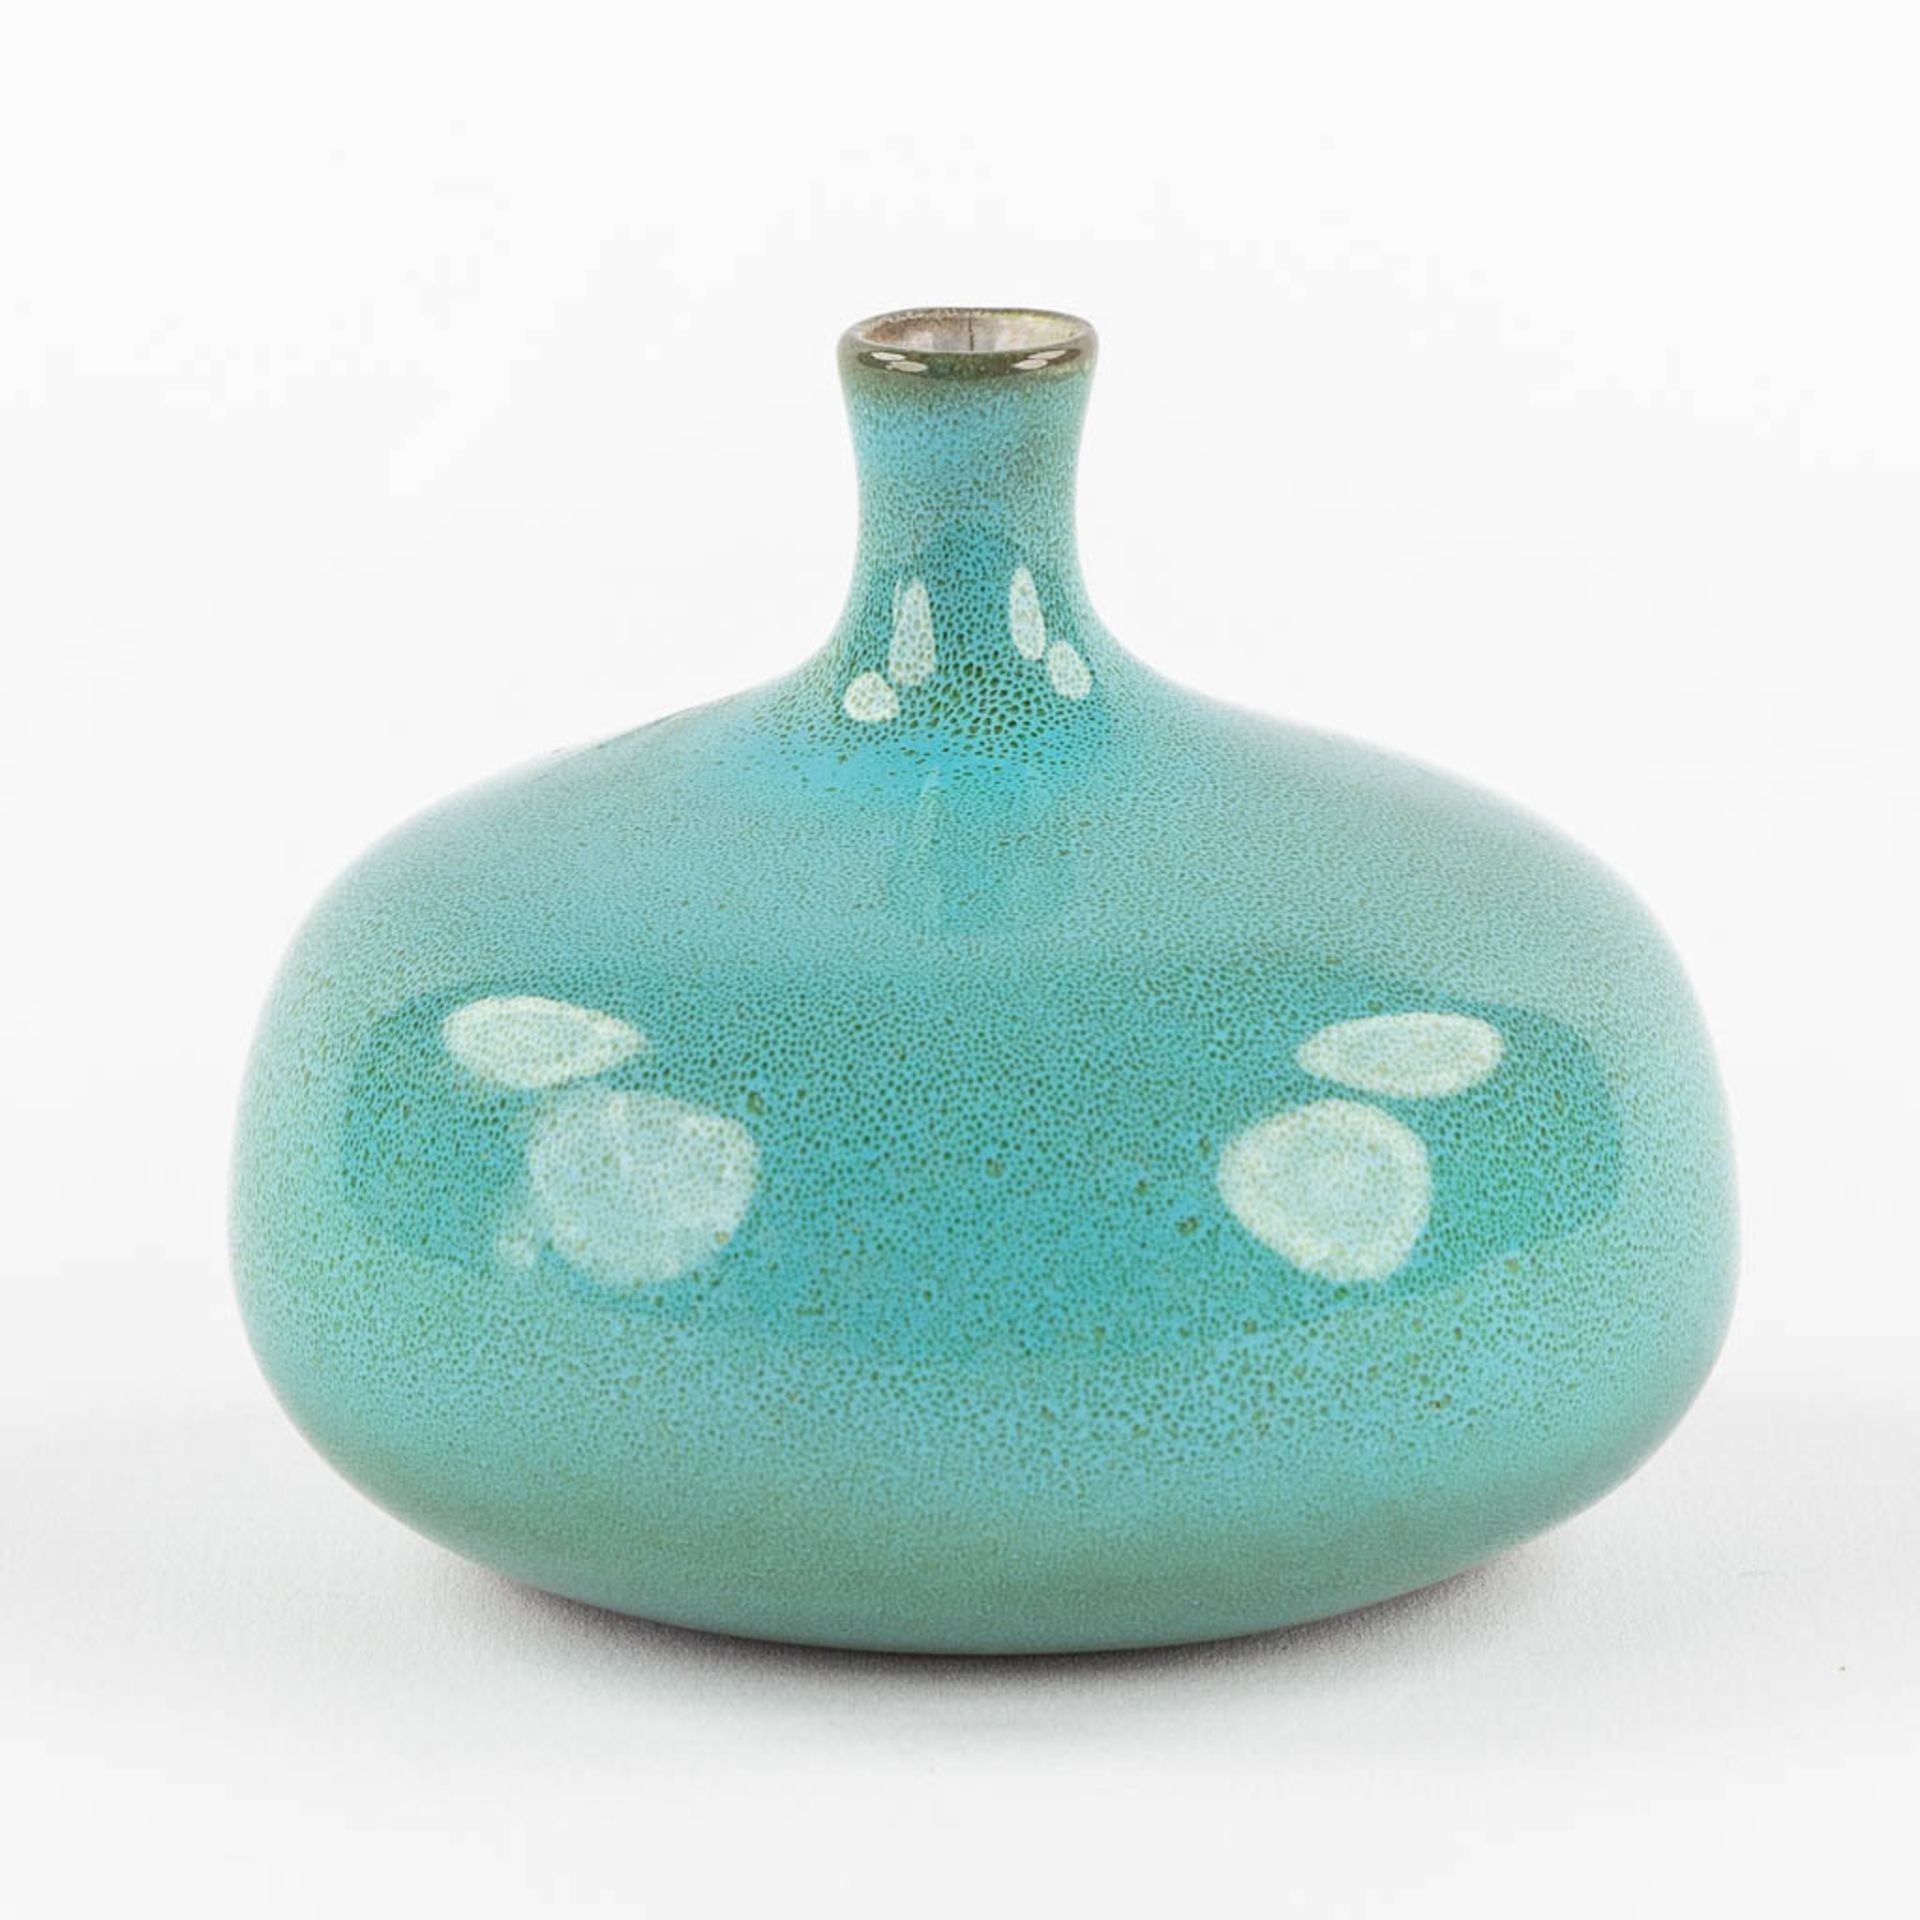 Jacques & Dani RUELLAND (XX-XXI) 'Vase' glazed ceramics. (H:8 x D:10 cm)